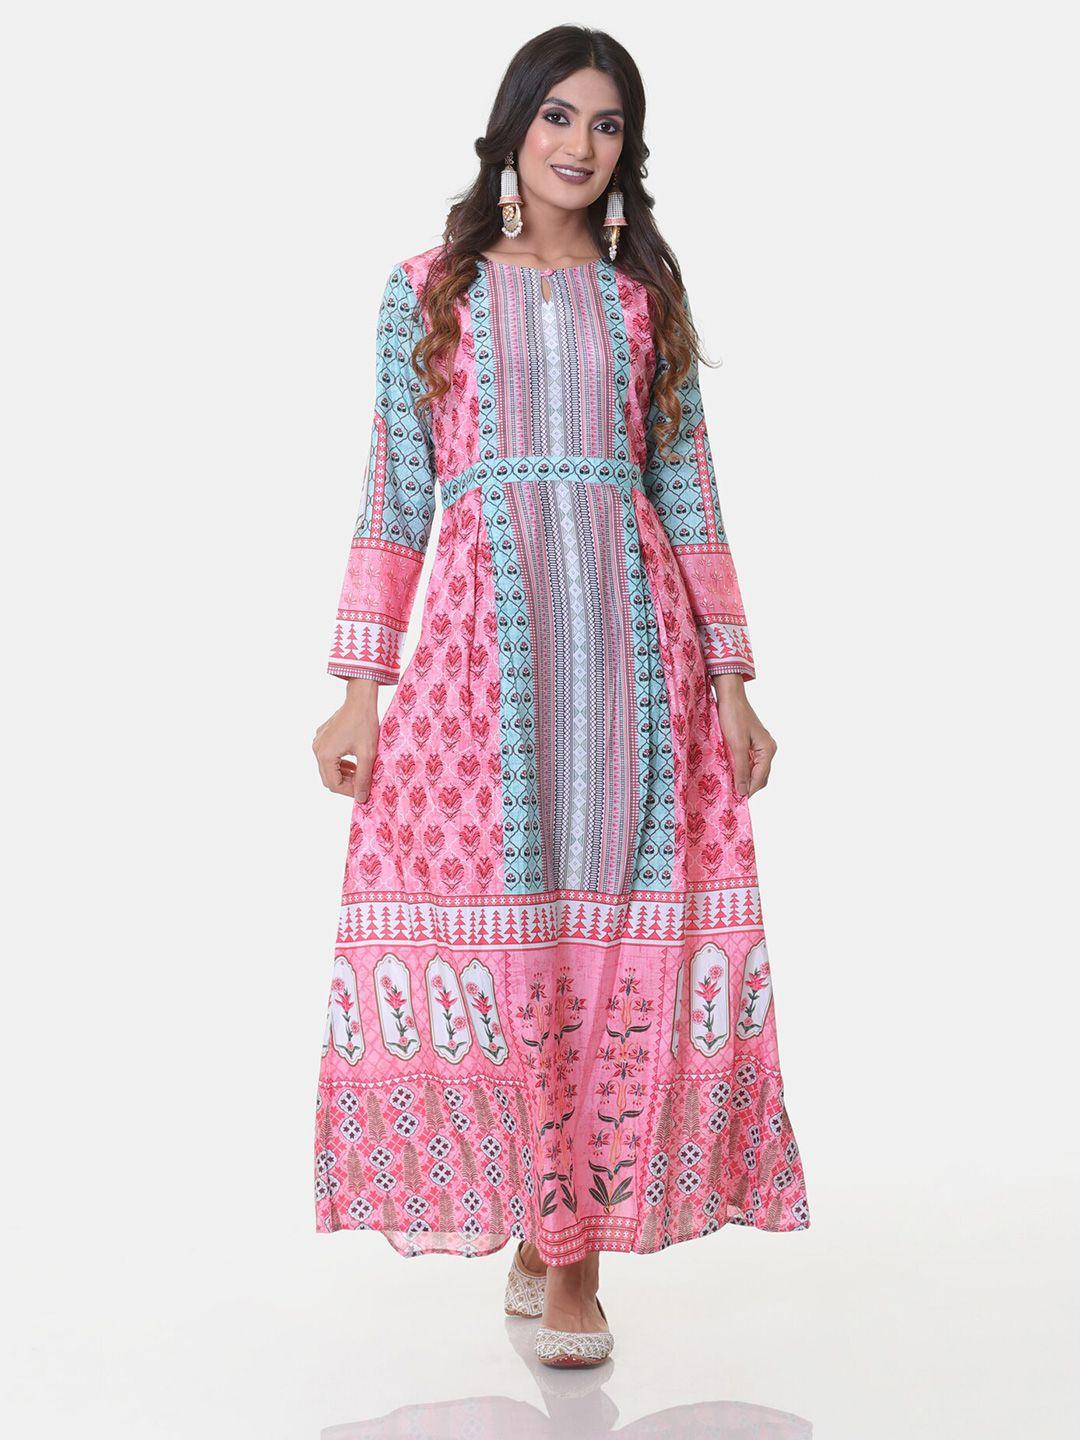 heeposh-pink-ethnic-motifs-ethnic-floral-printed-maxi-dress